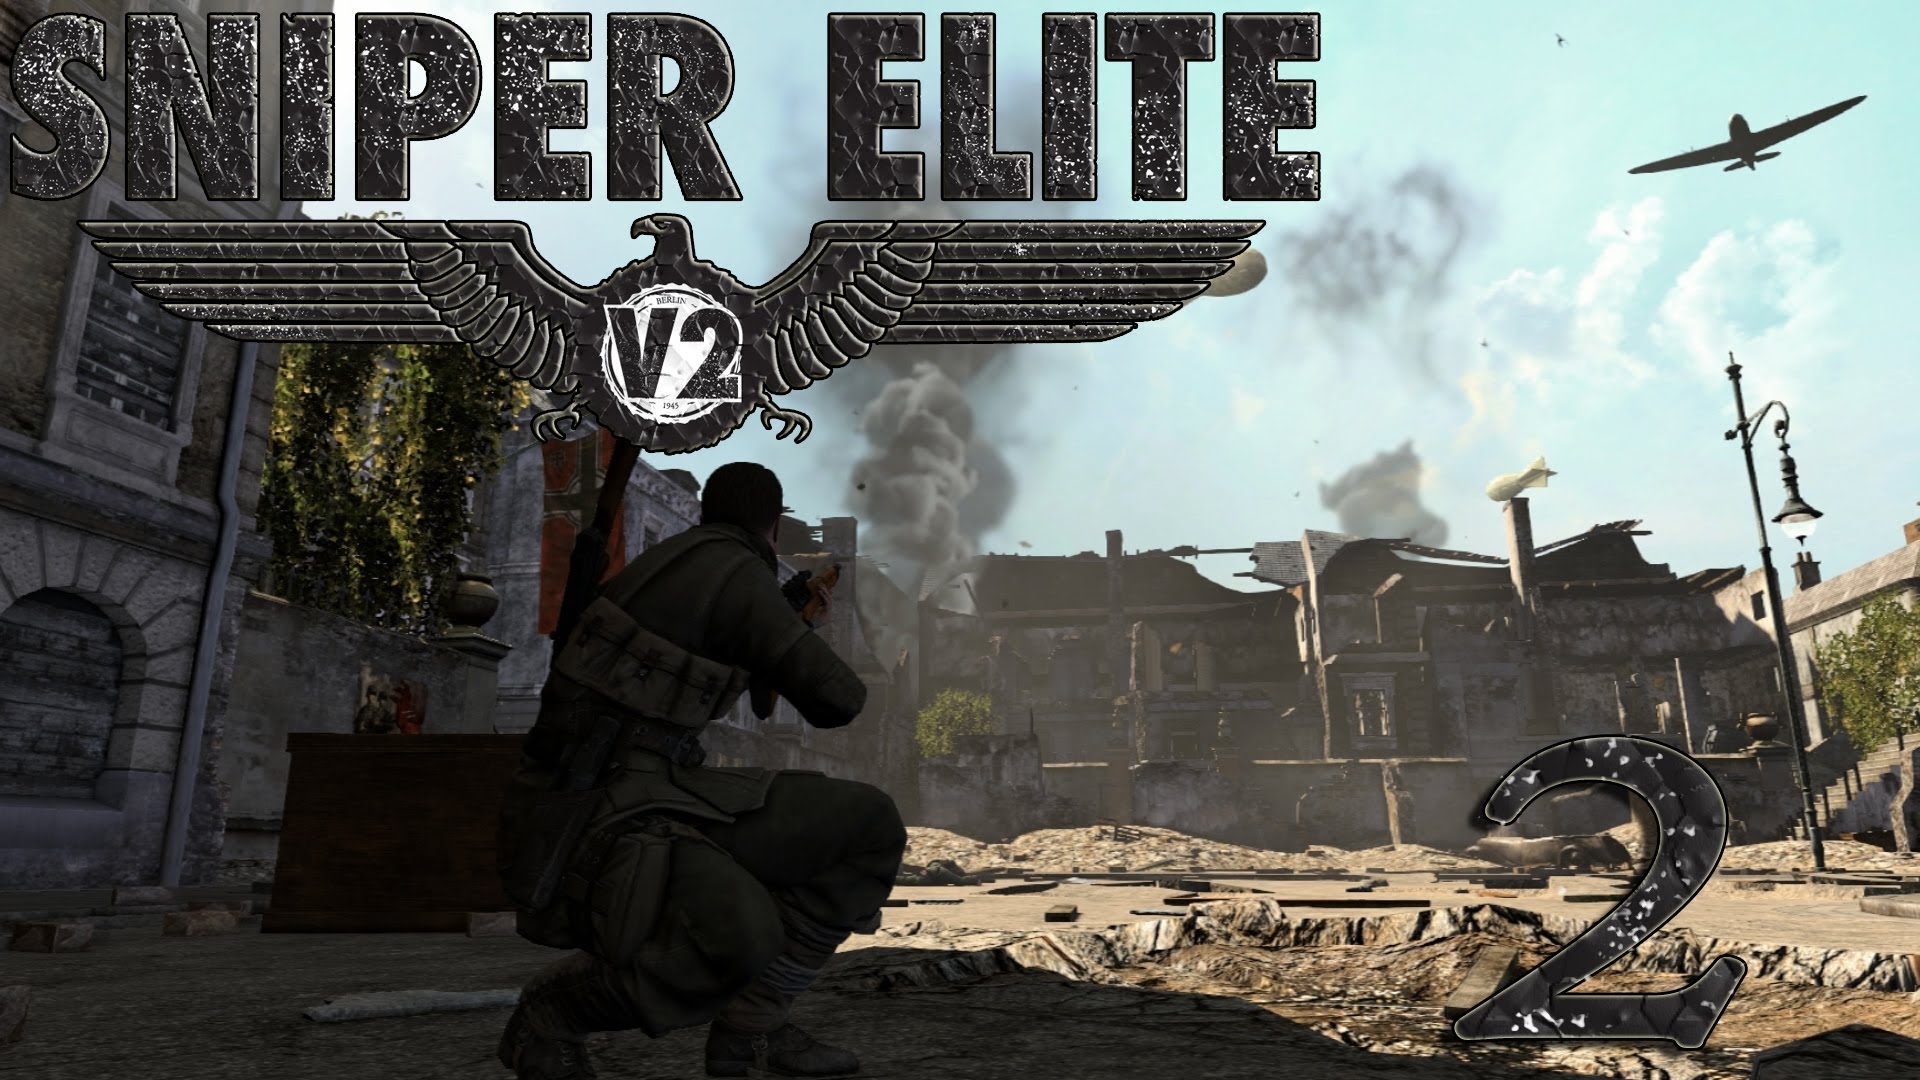 sniper elite 5 pc download